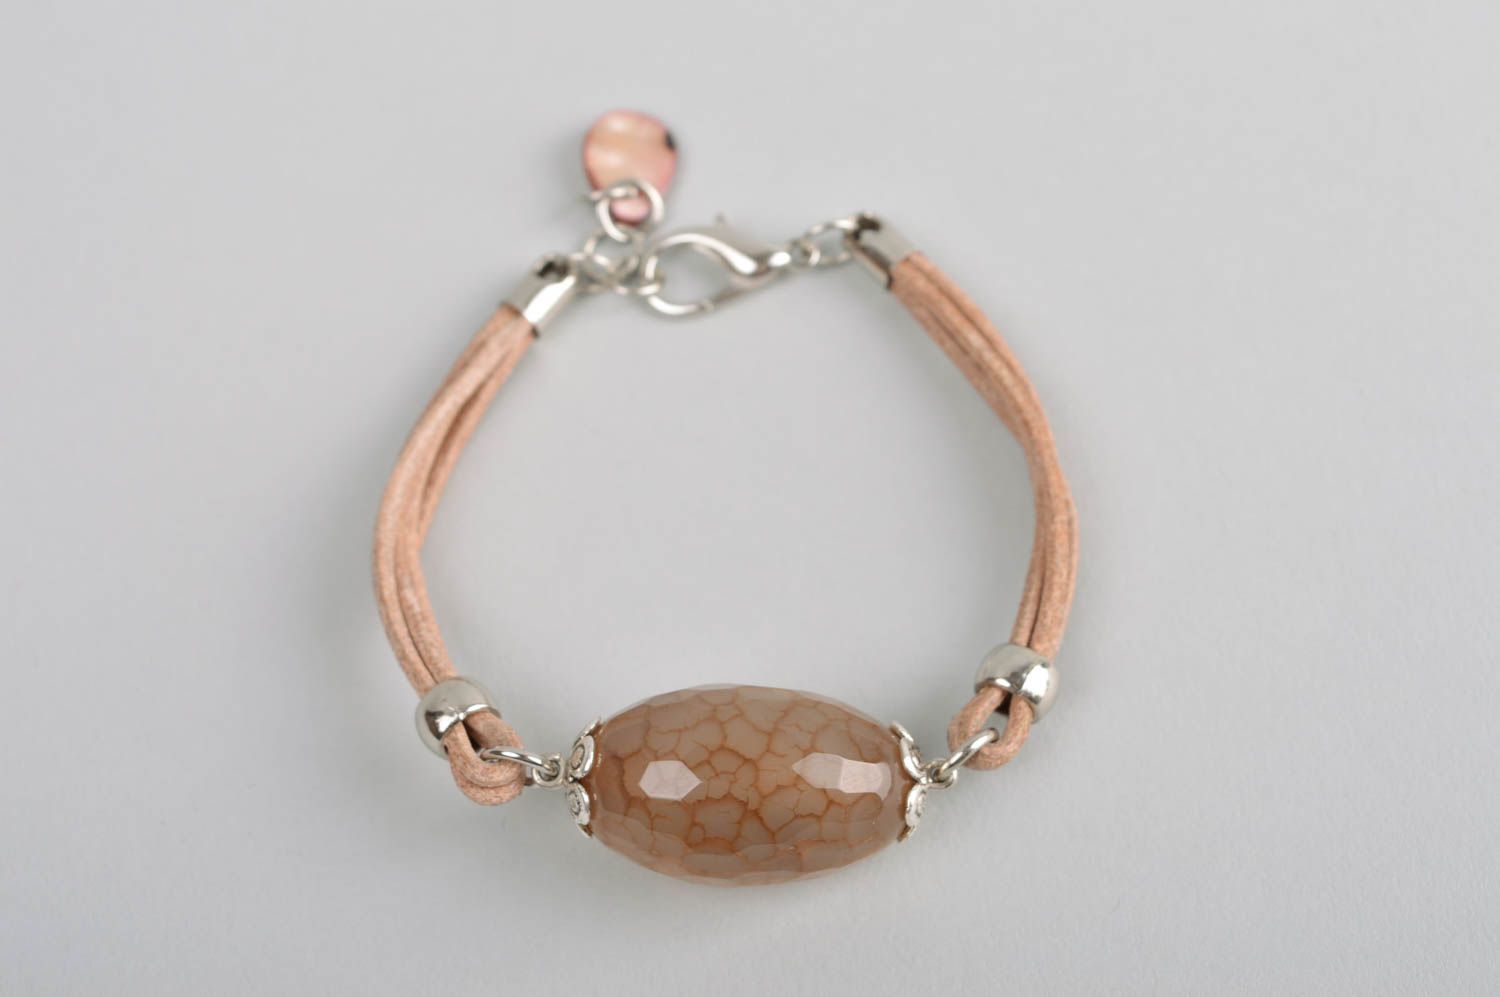 Handmade gemstone bracelet leather bracelet designs accessories for girls photo 2